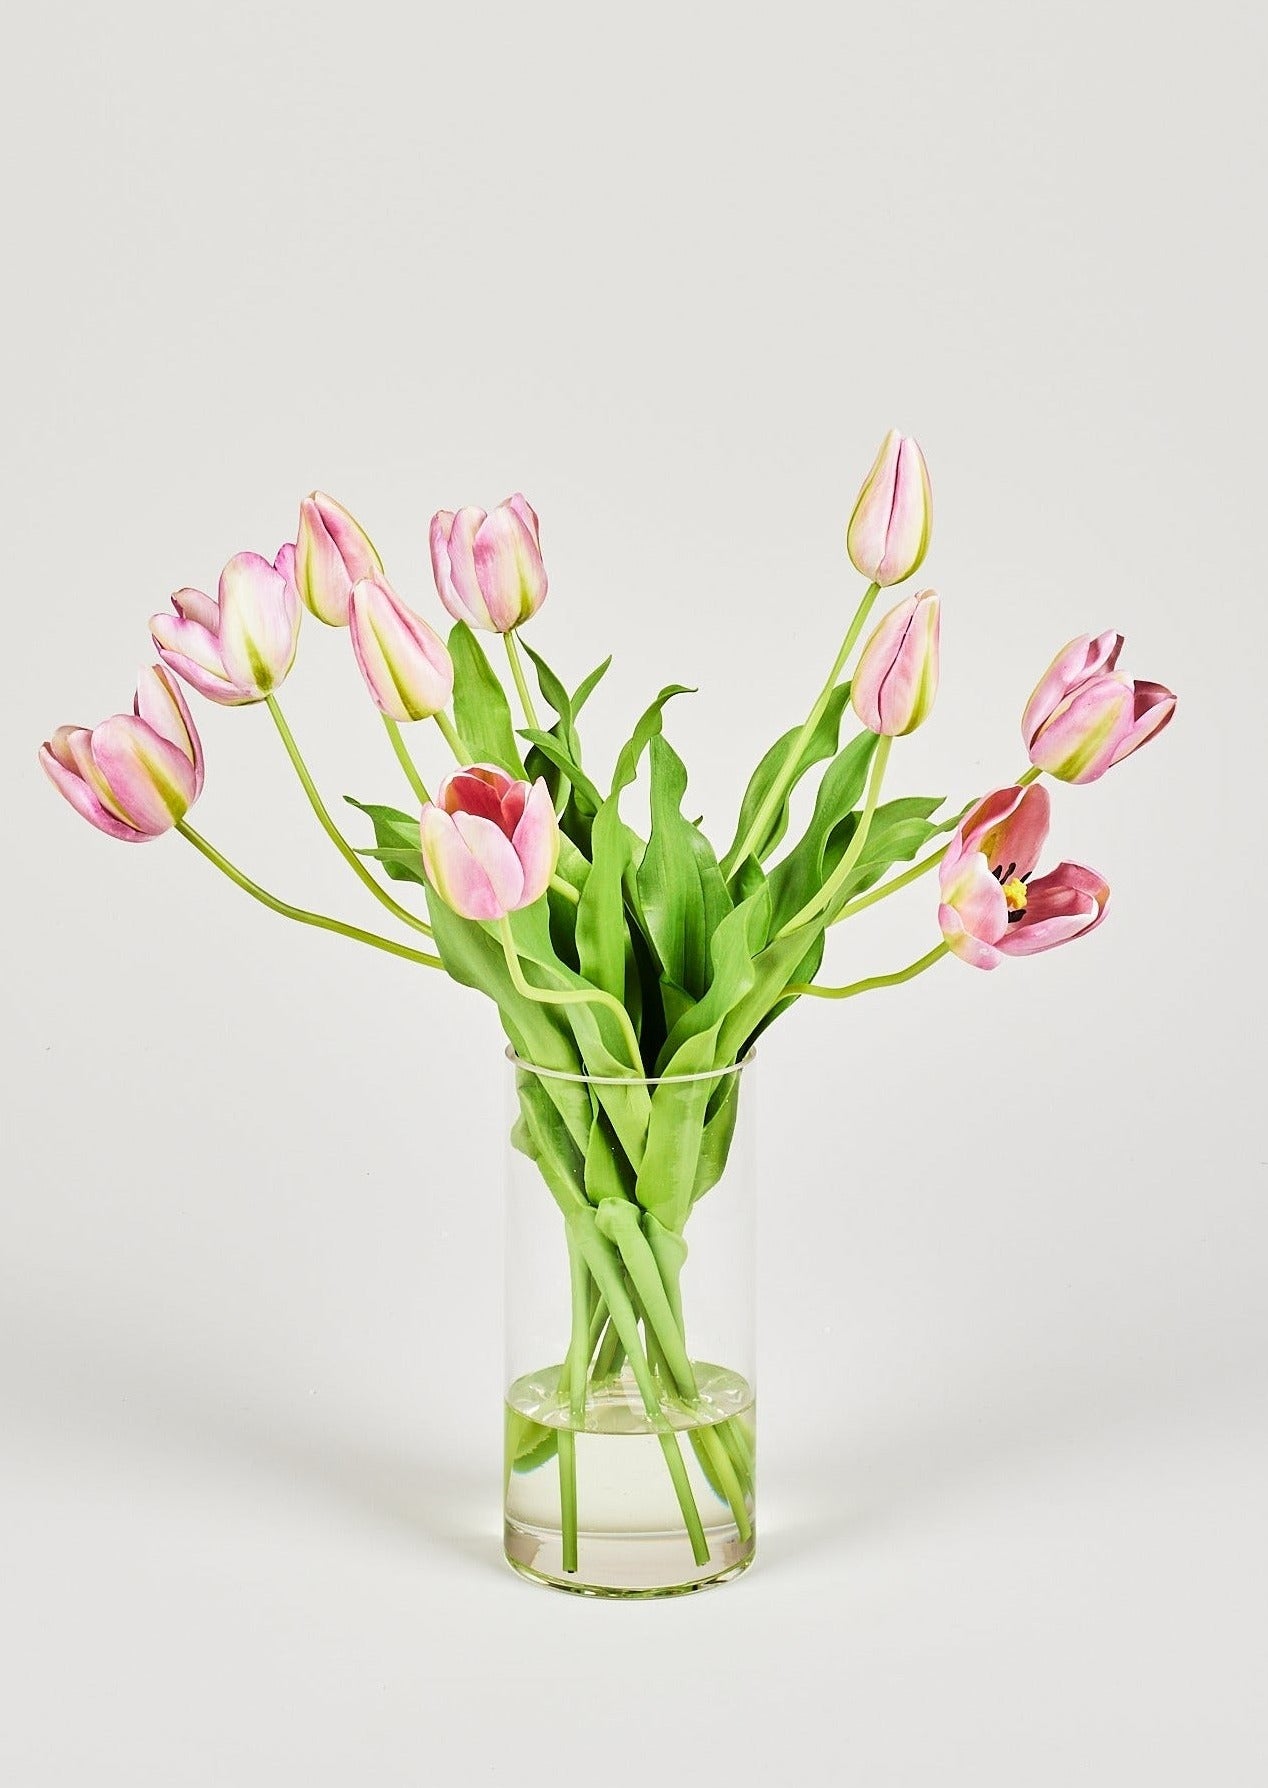 Faux Tulips in Glass Vase | Luxury Flower Arrangements at Afloral.com